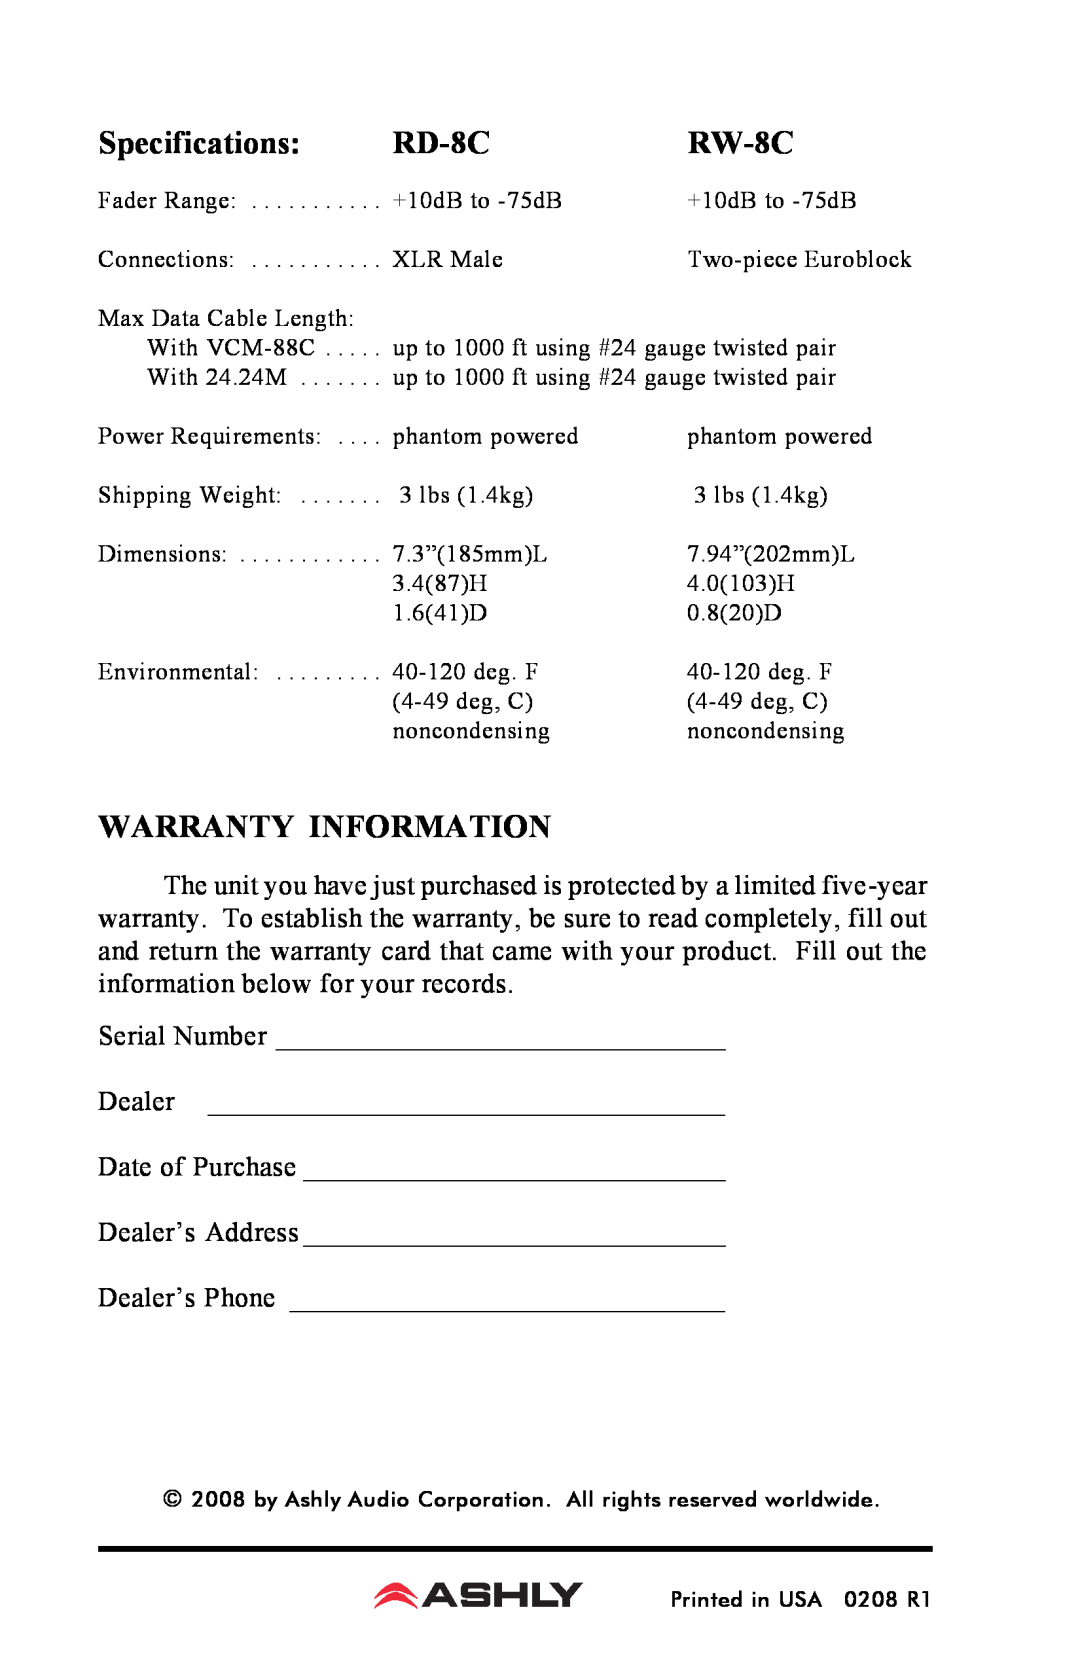 Ashly RD-8C manual Specifications, RW-8C, Warranty Information 